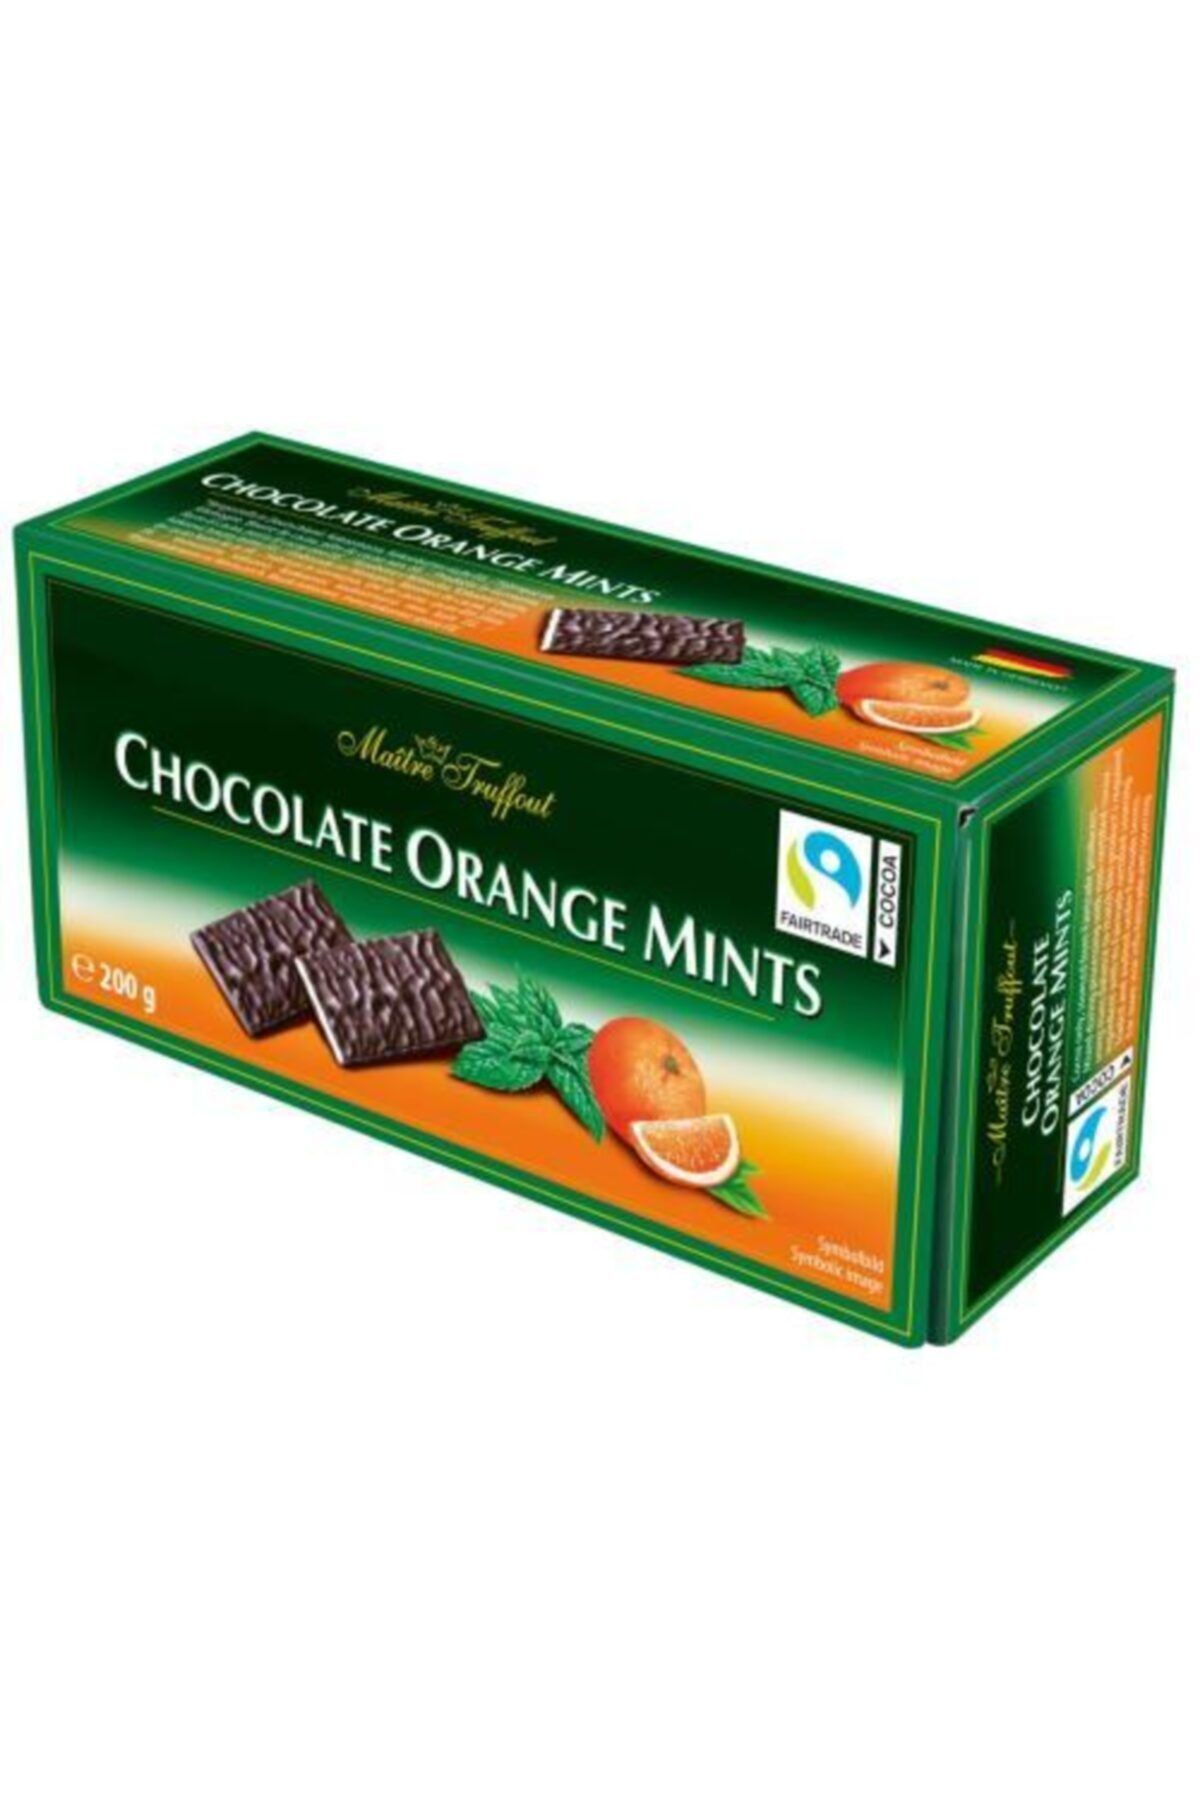 Chocolate Maıtre Truffout Ince Orange Mint Portakallı Naneli Çikolata Thin